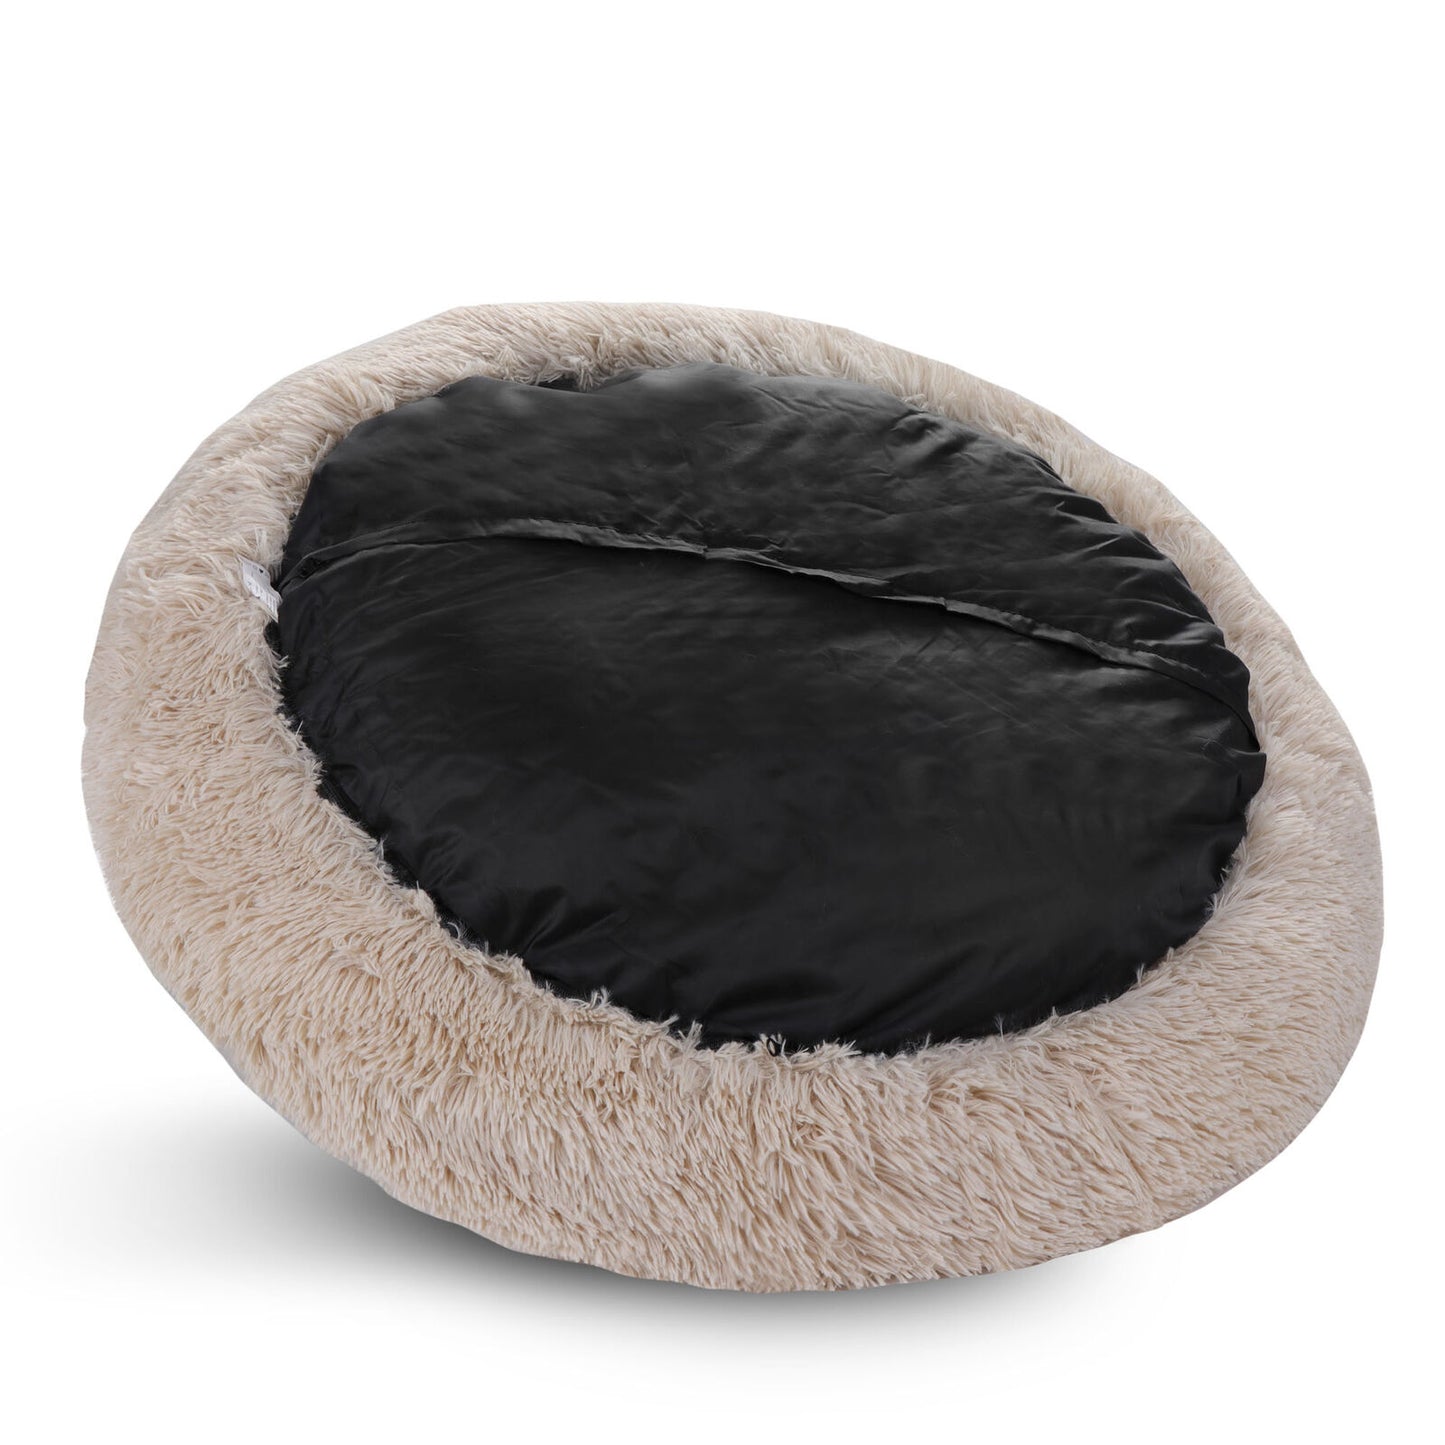 Fur Donut Cuddler Pet Calming Bed Dog Beds Soft Warmer Medium Small Dogs Cats